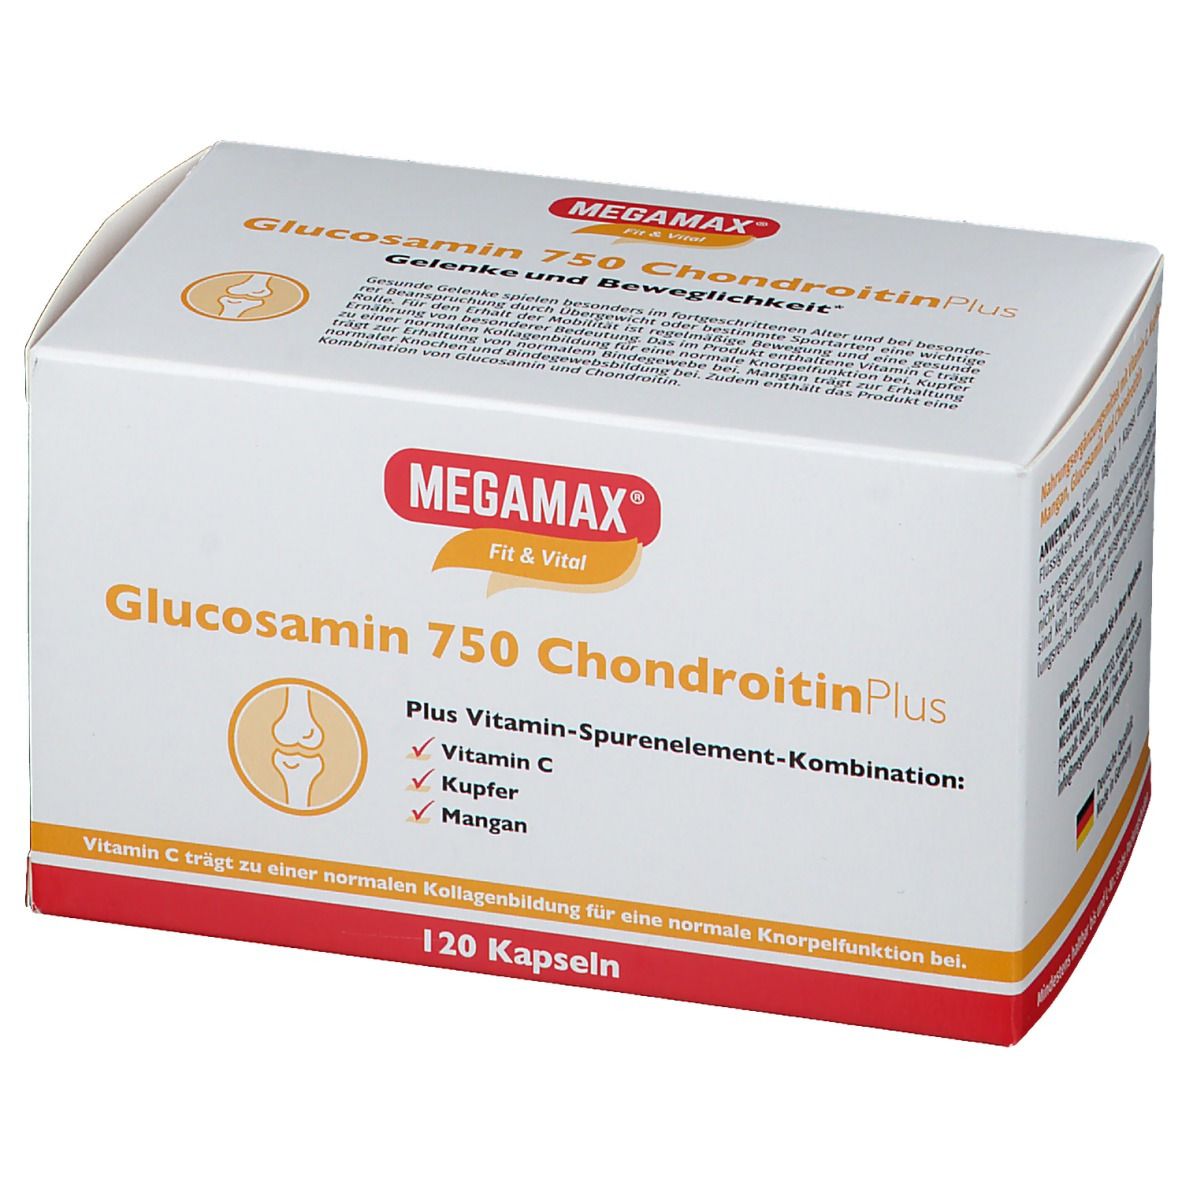 MEGAMAX® Fit & Vital Glucosamin 750 Chondroitin Plus